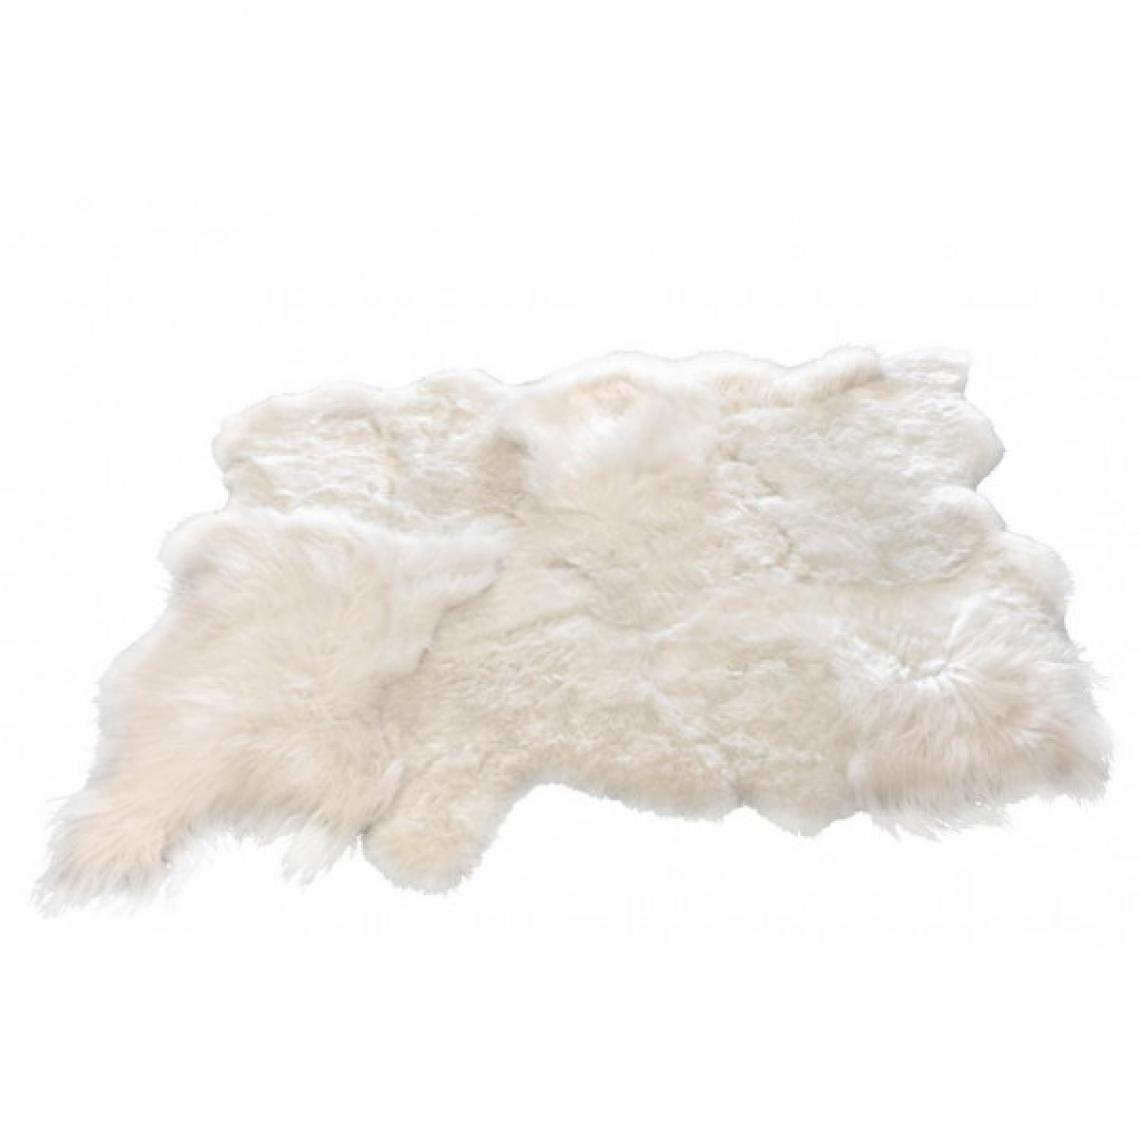 Dansmamaison - Tapis Mouton Blanc Large - L 200 x l 300 x H 0 cm - Tapis